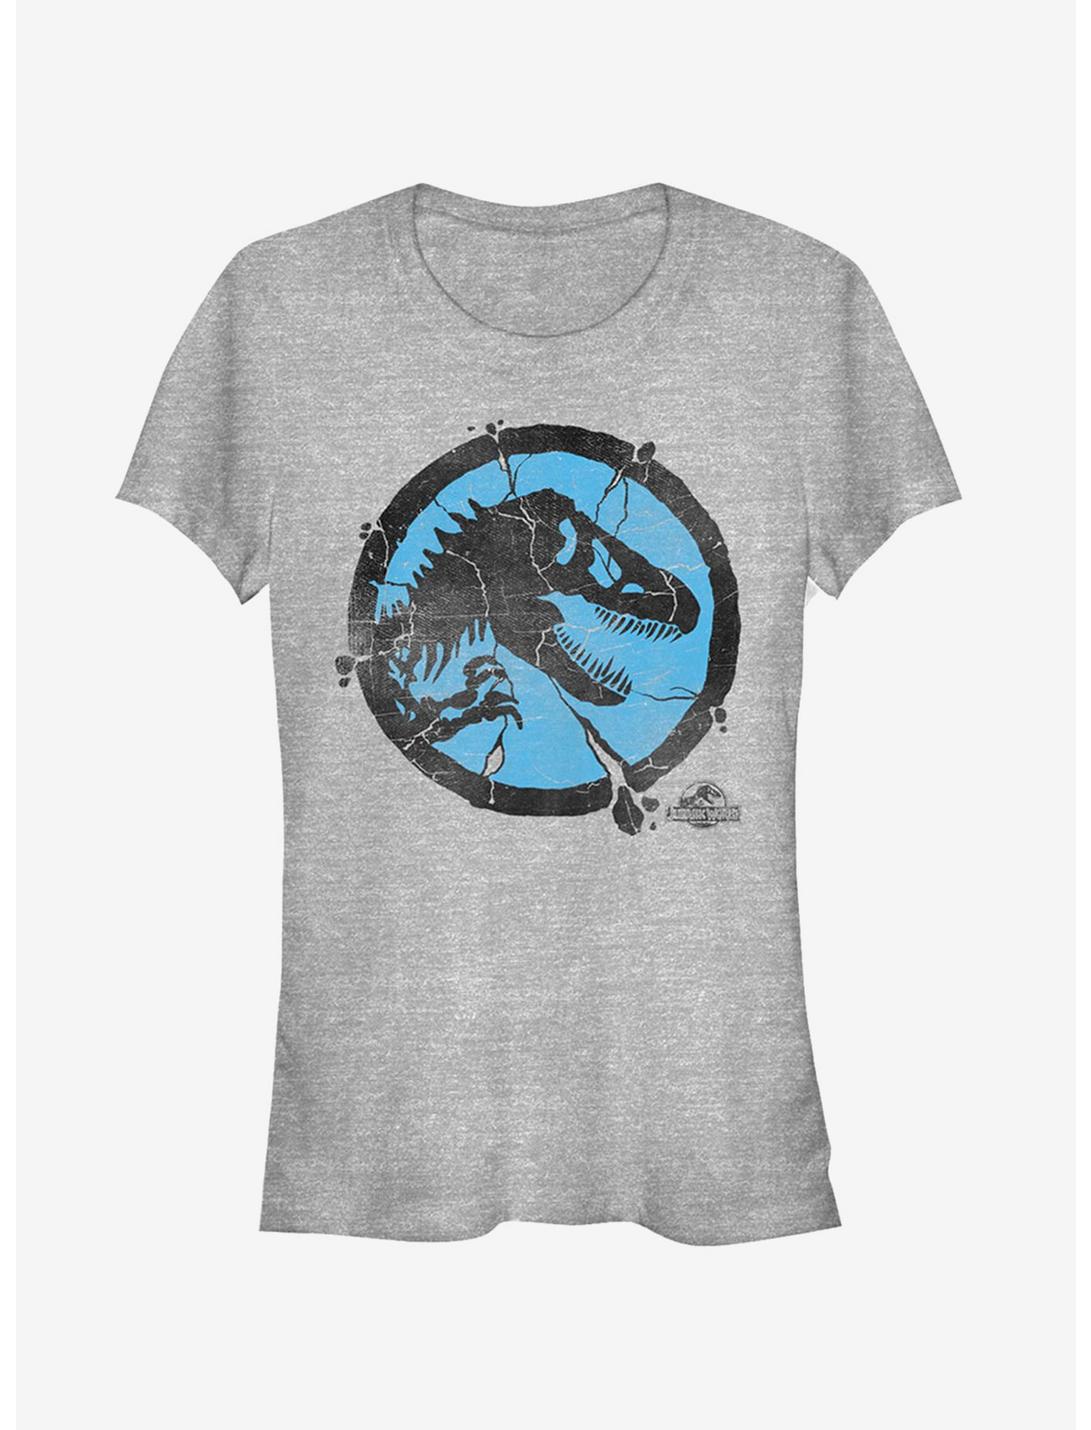 Cracked T. Rex Logo Girls T-Shirt, ATH HTR, hi-res